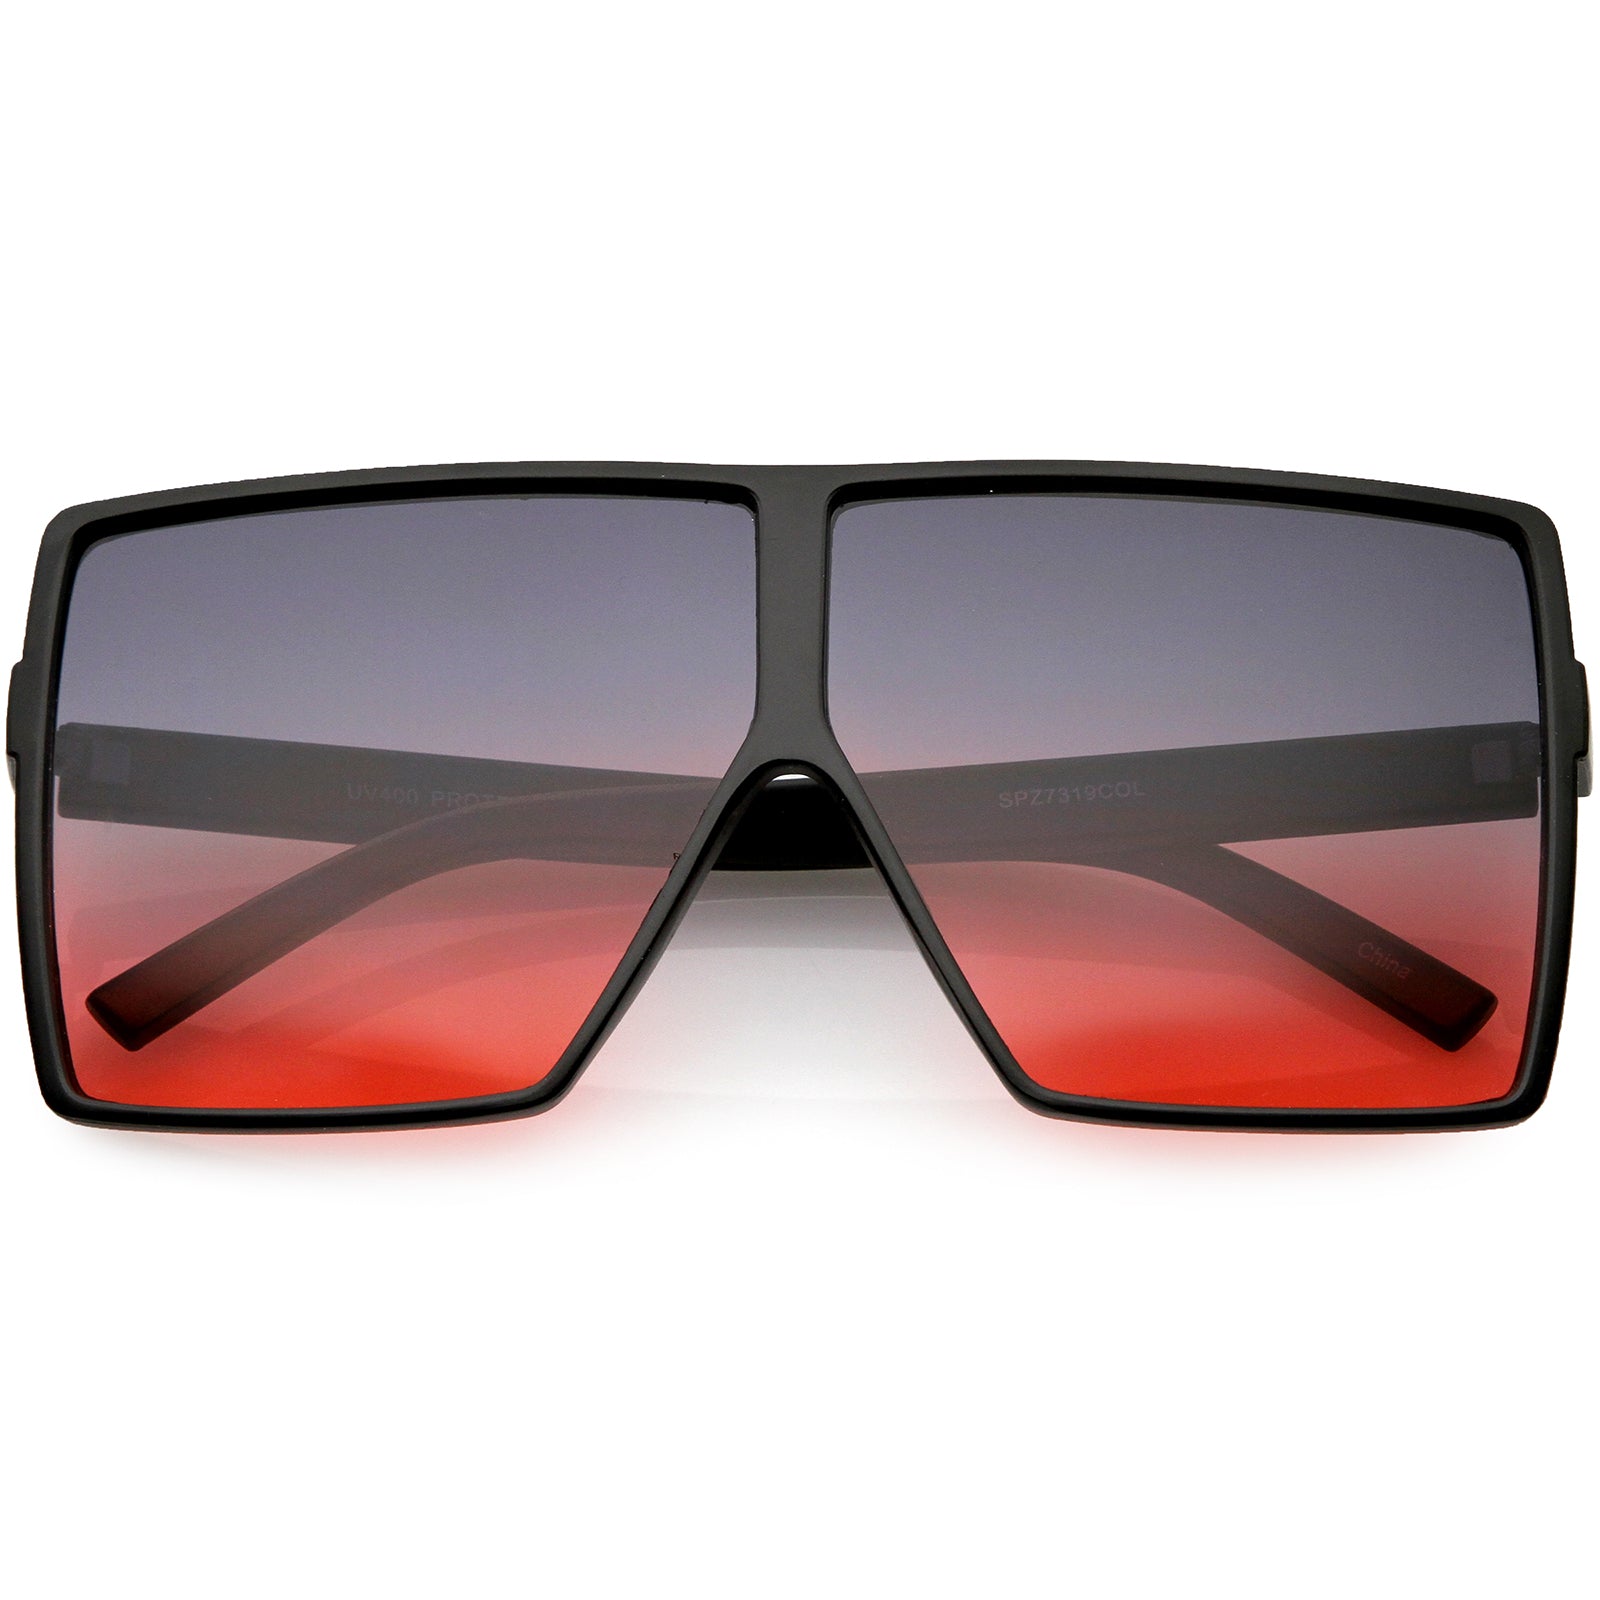 Square Sunglasses - Sunglasses